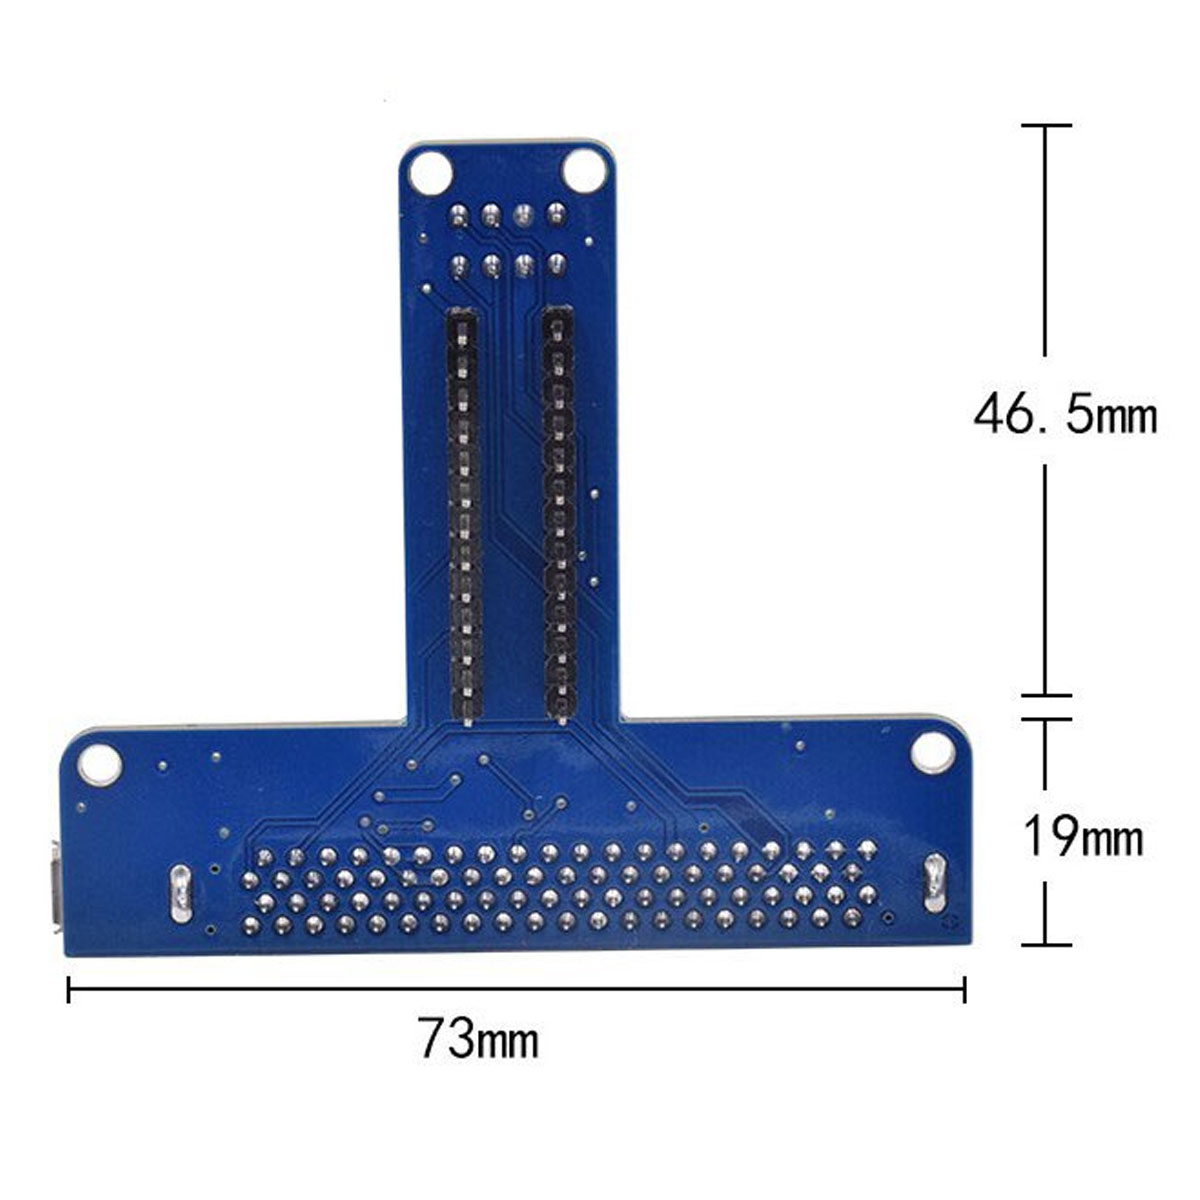 Shield adaptador expansor para conectar Placa BBC Microbit Micro:bit na Protoboard